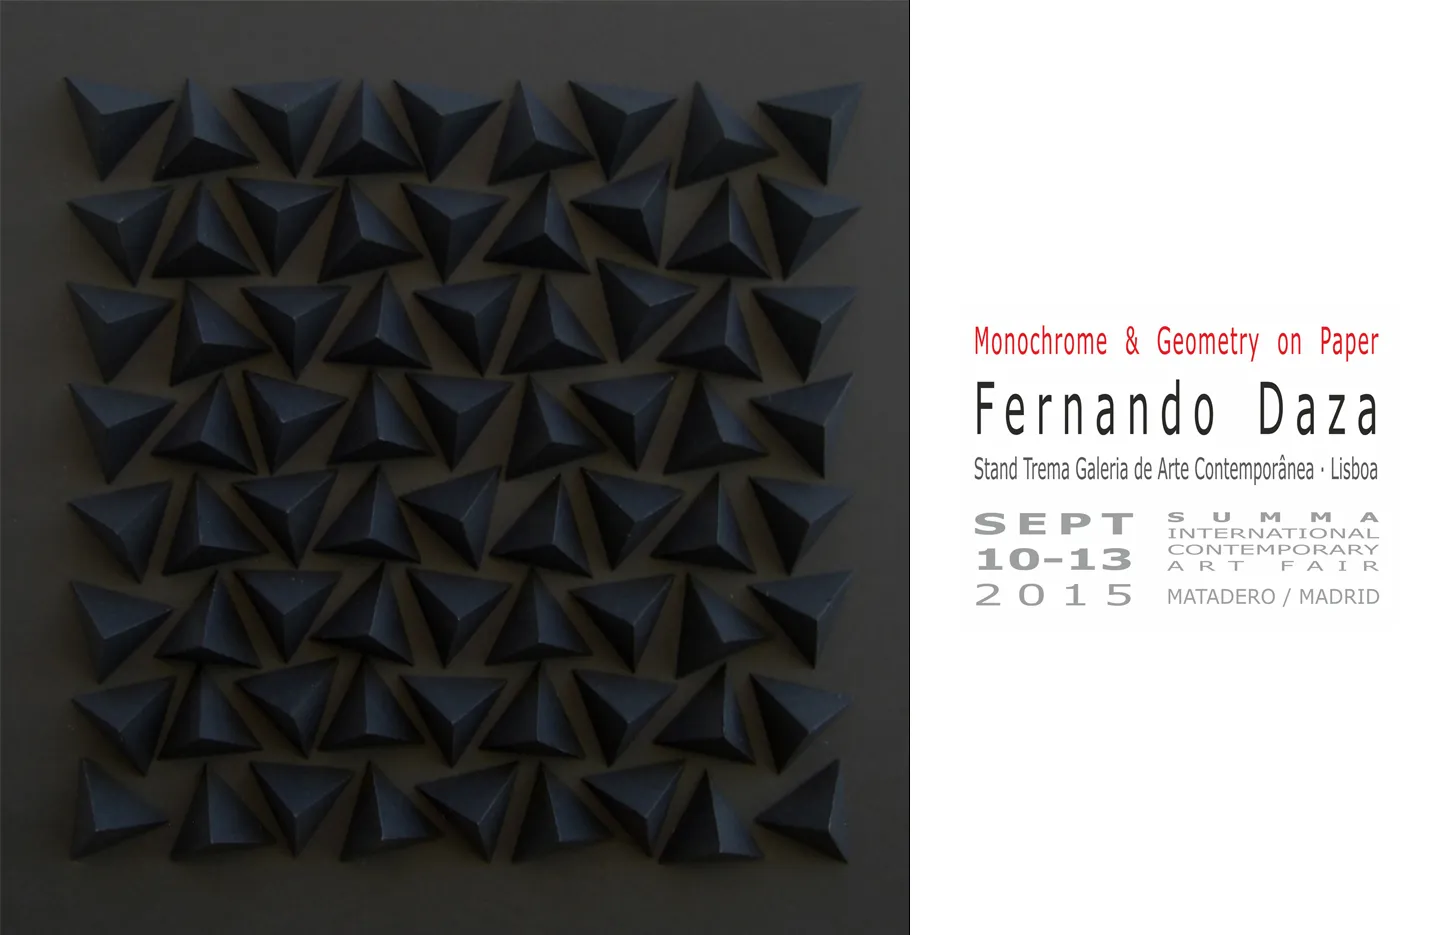 Fernando Daza Visual Artist - evento monochrome